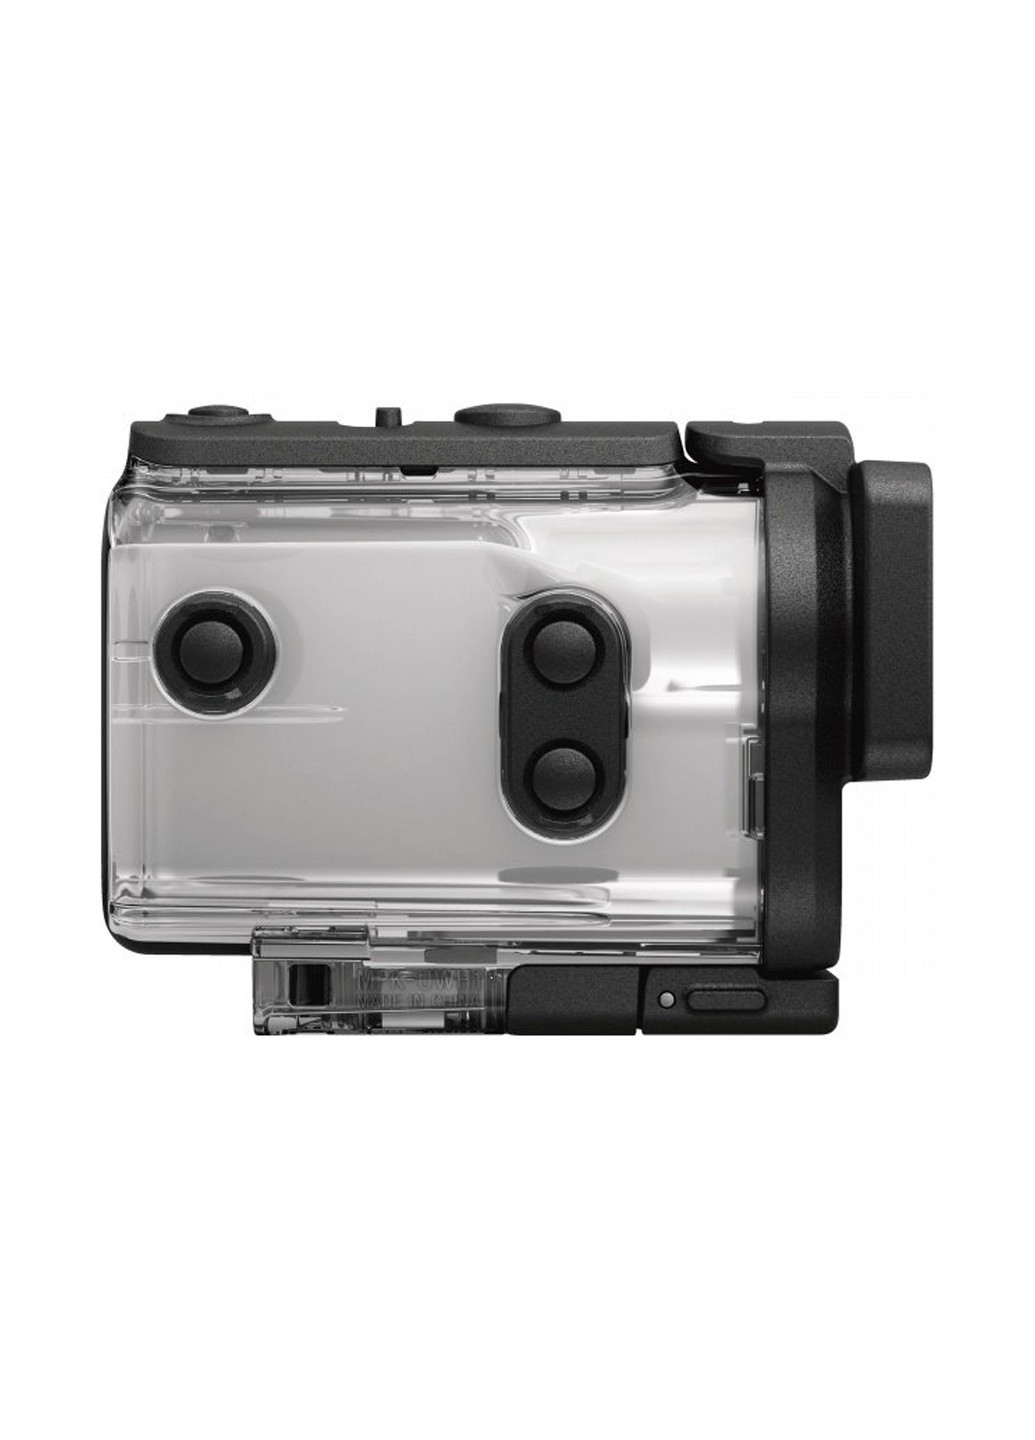 Экшн-камера (FDRX3000.E35) Sony fdr-x3000 (134998219)